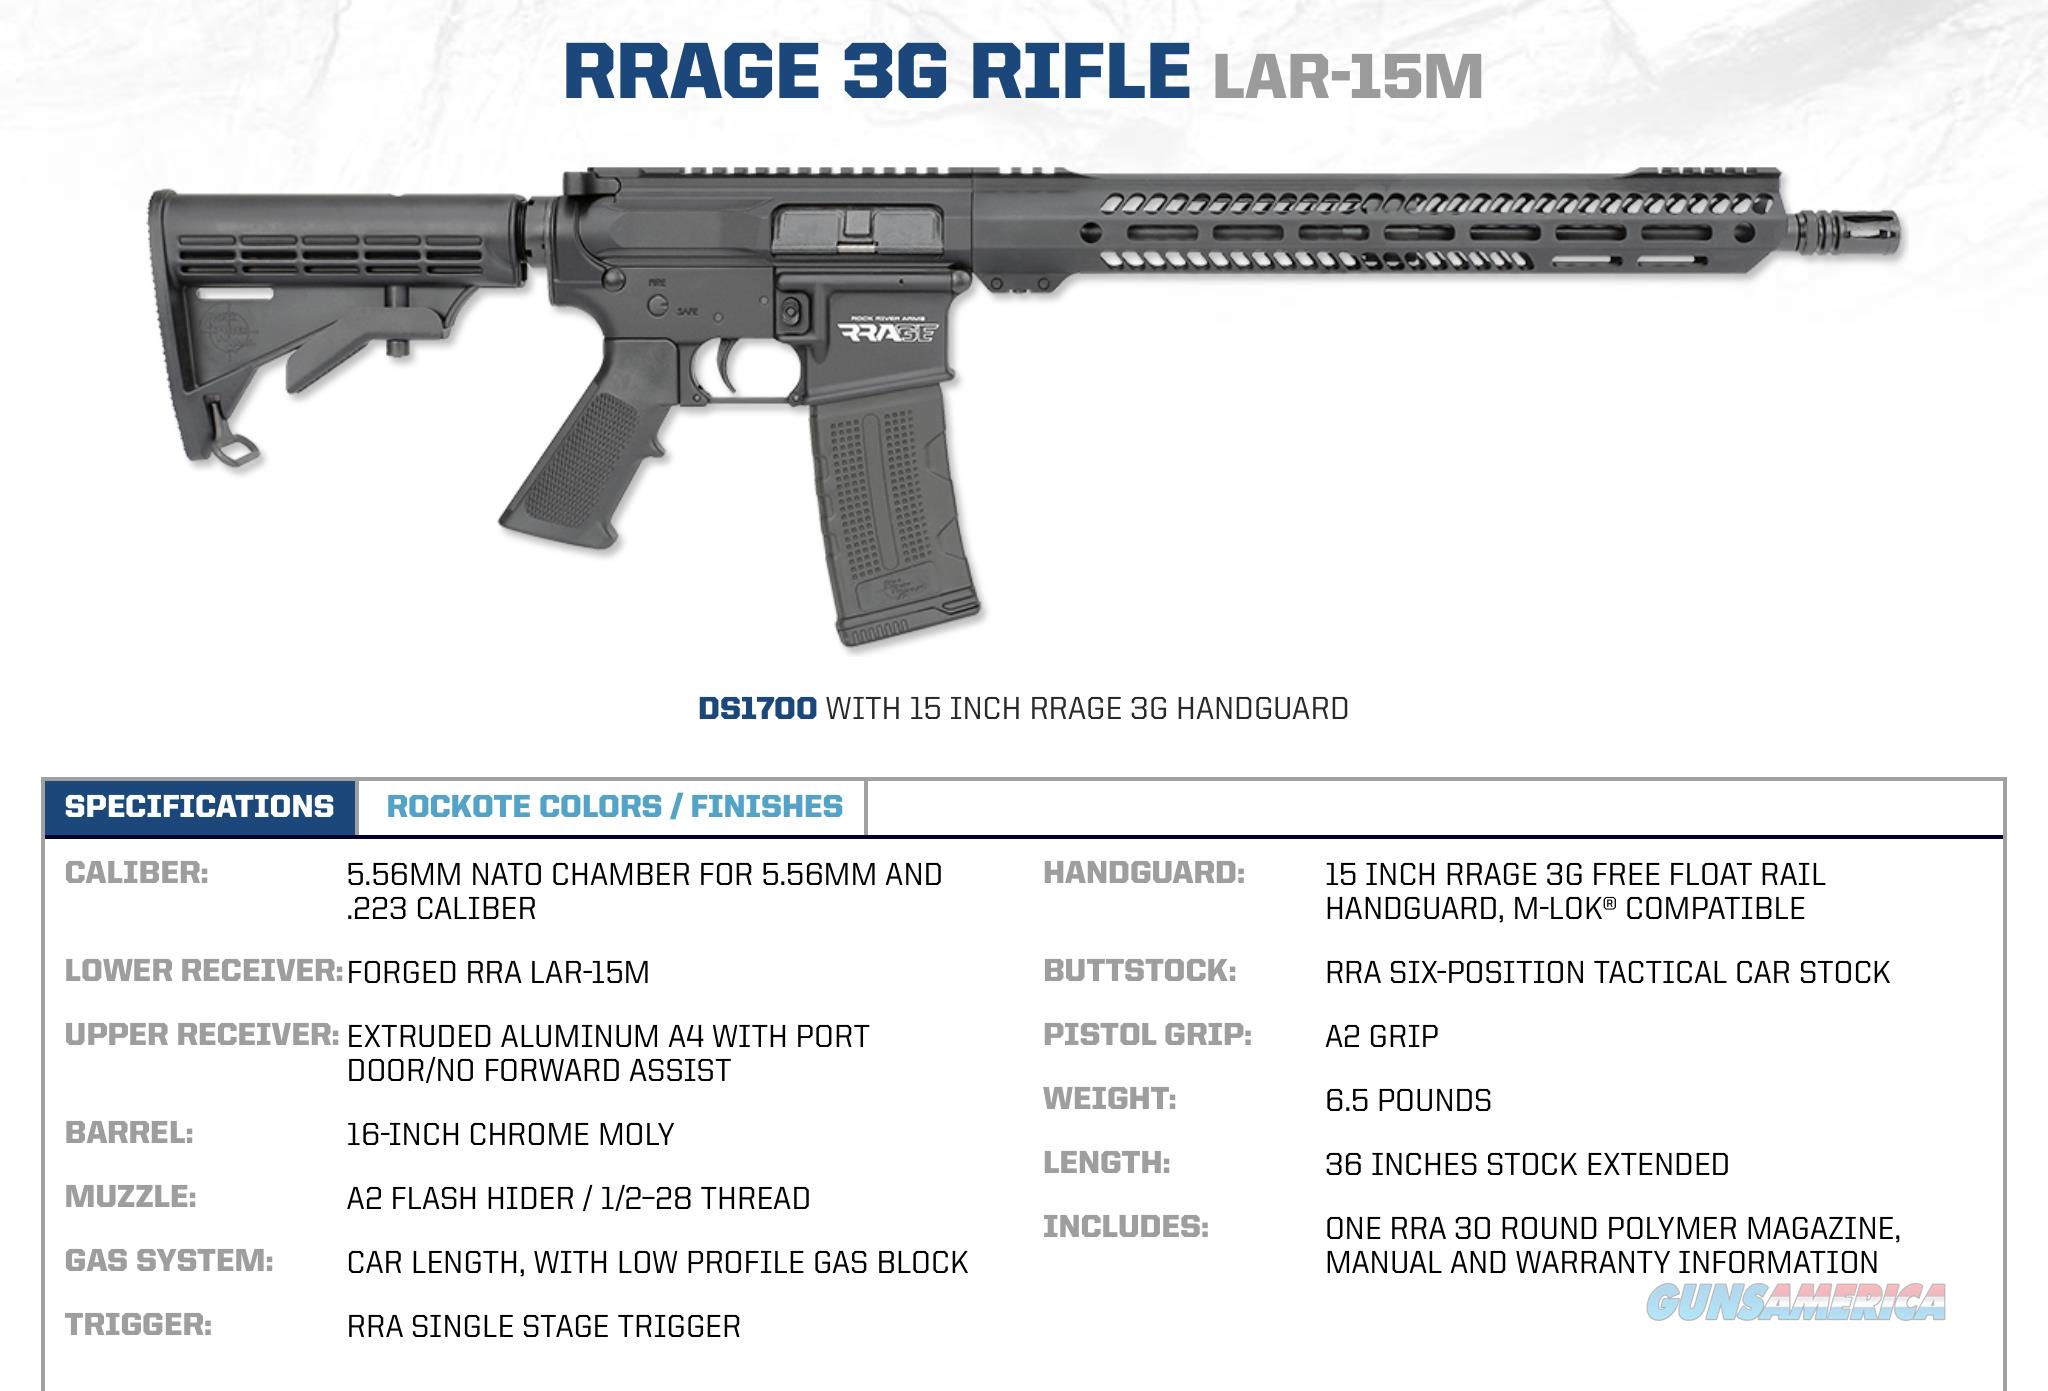 Rock River Arms RRage 3G NIB for sale at Gunsamerica.com: 989021193